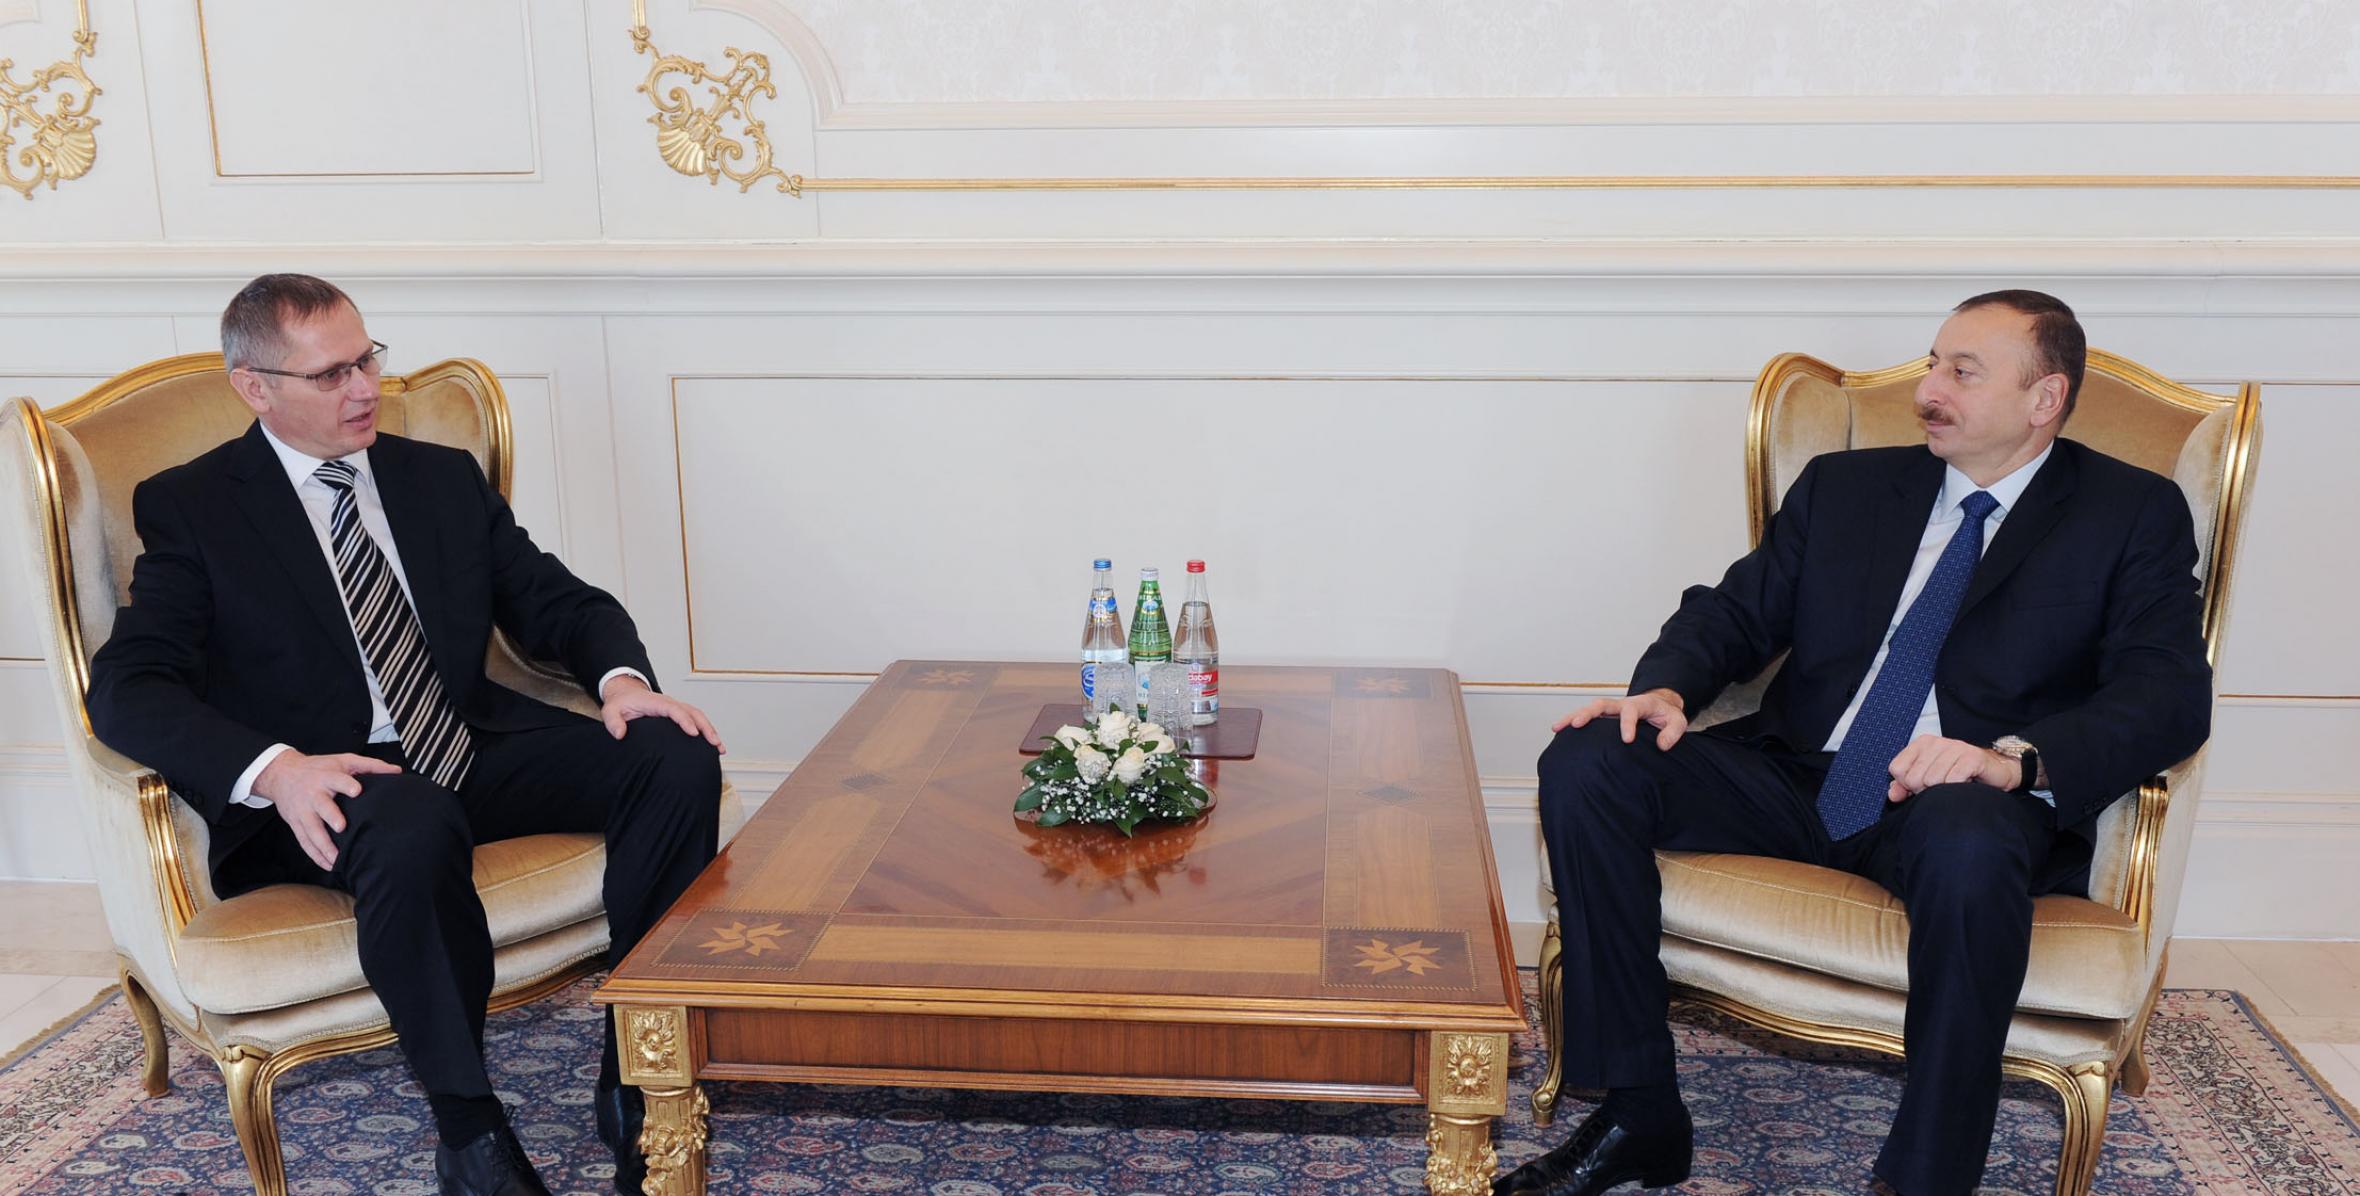 Ilham Aliyev accepted the credentials of the Ambassador of Croatia to Azerbaijan, Mr. Drazen Hrastic